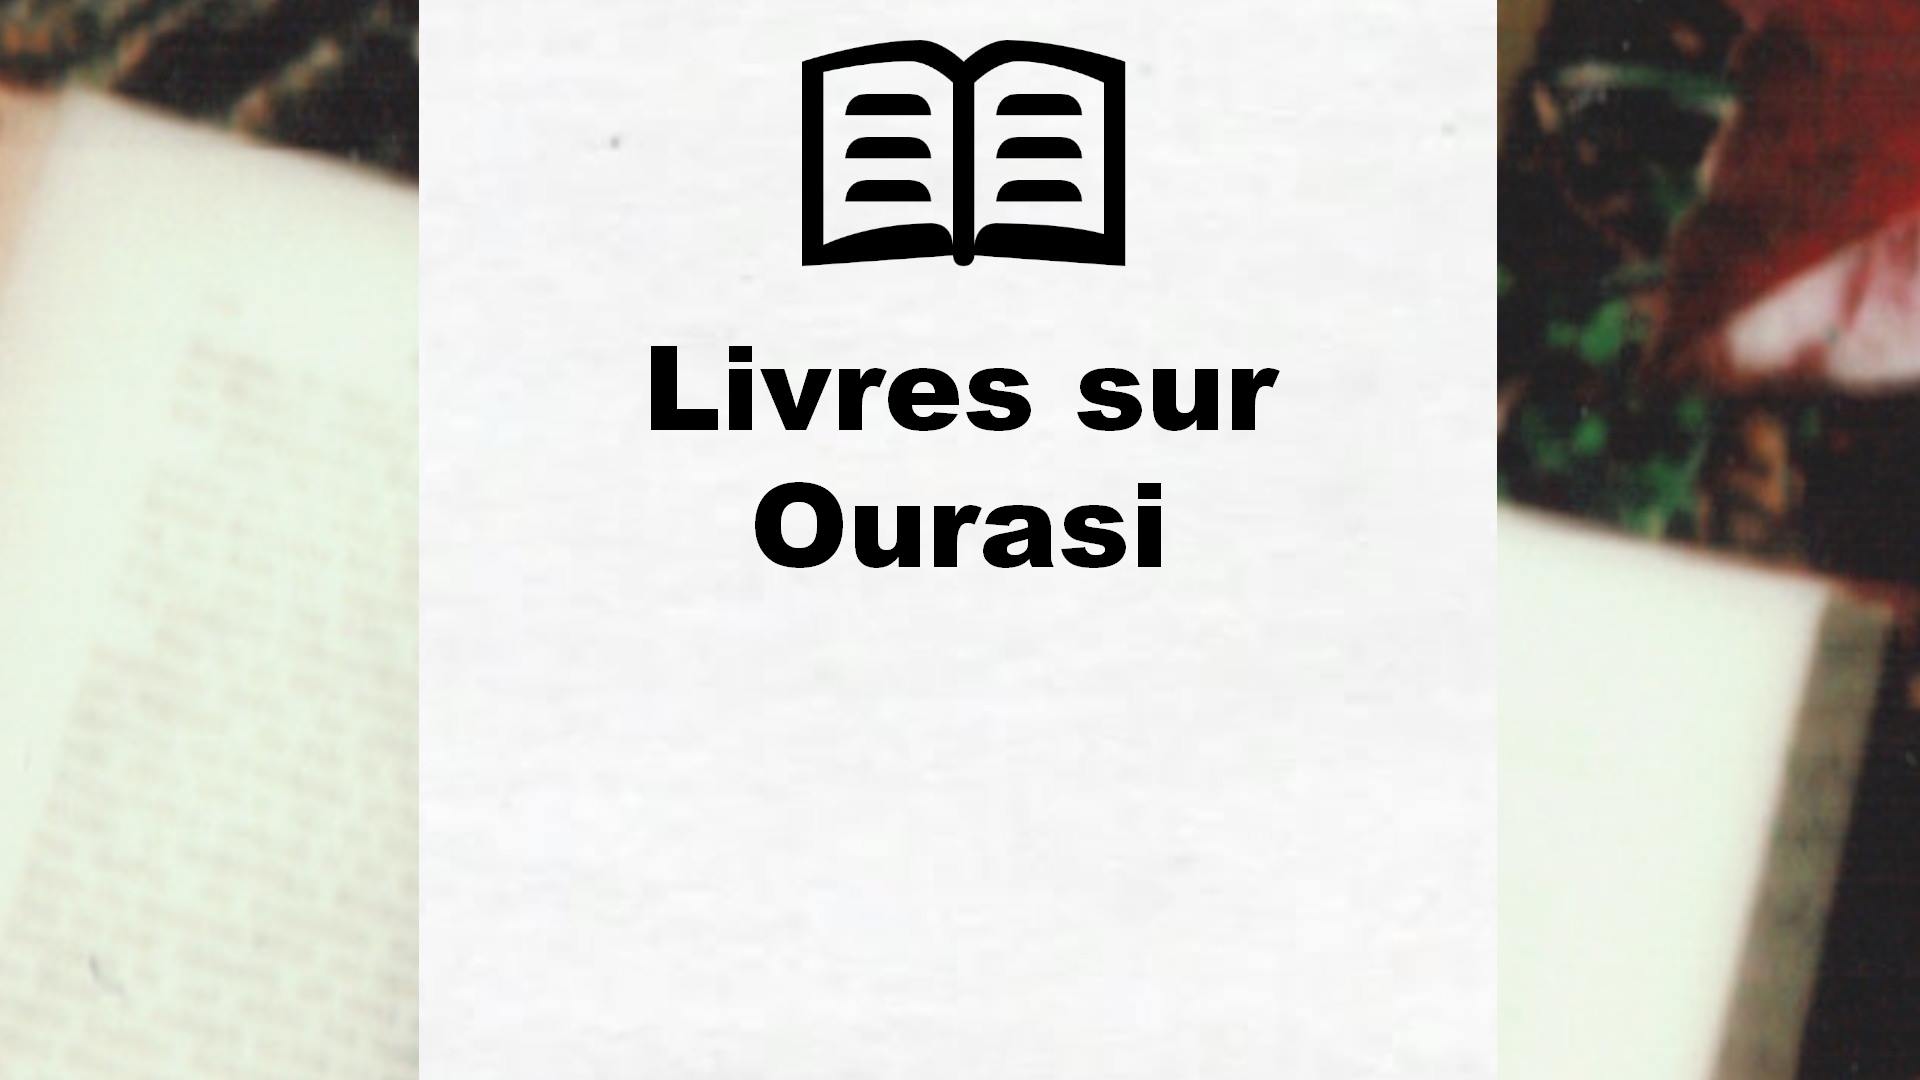 Livres sur Ourasi